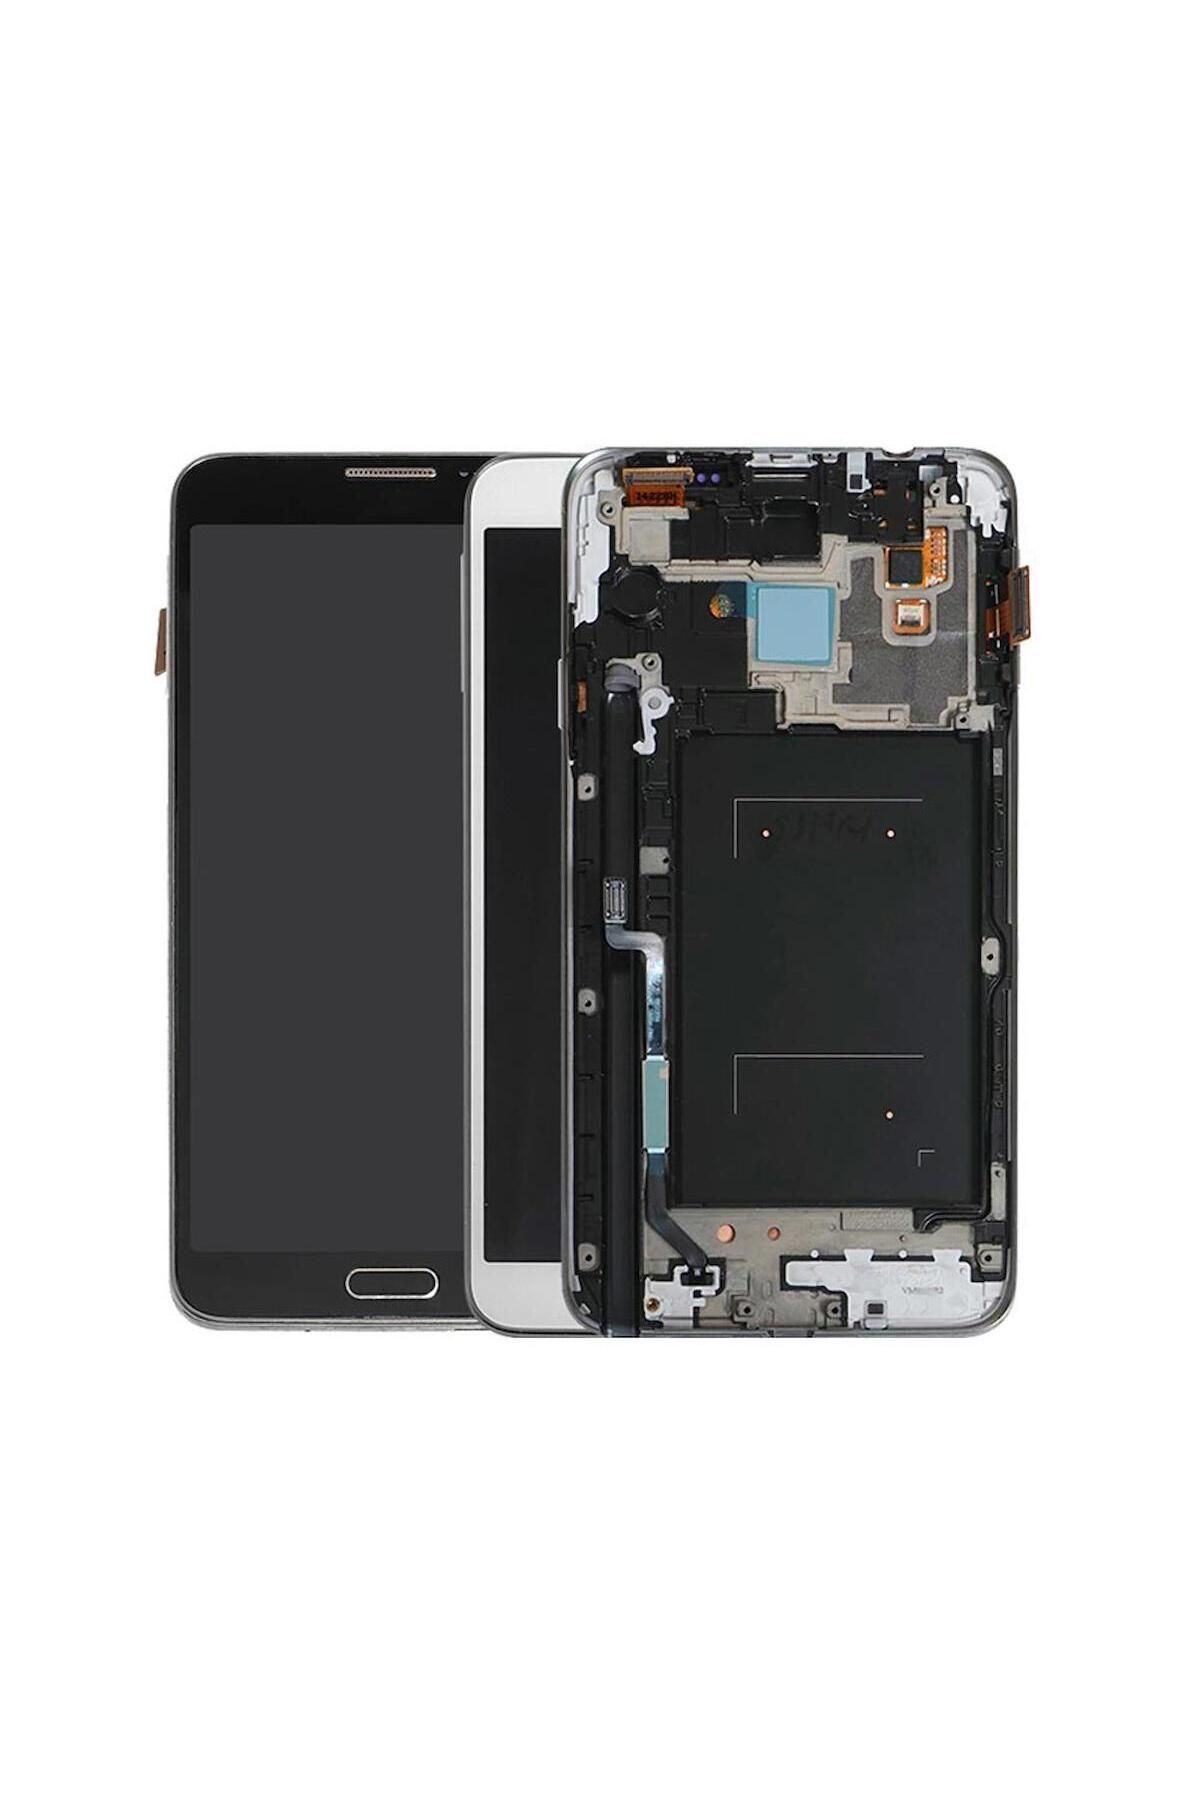 TeknoPrime Samsung Galaxy Note 3 Neo N7505 Ile Uyumlu Oled Ekran Dokunmatik Beyaz